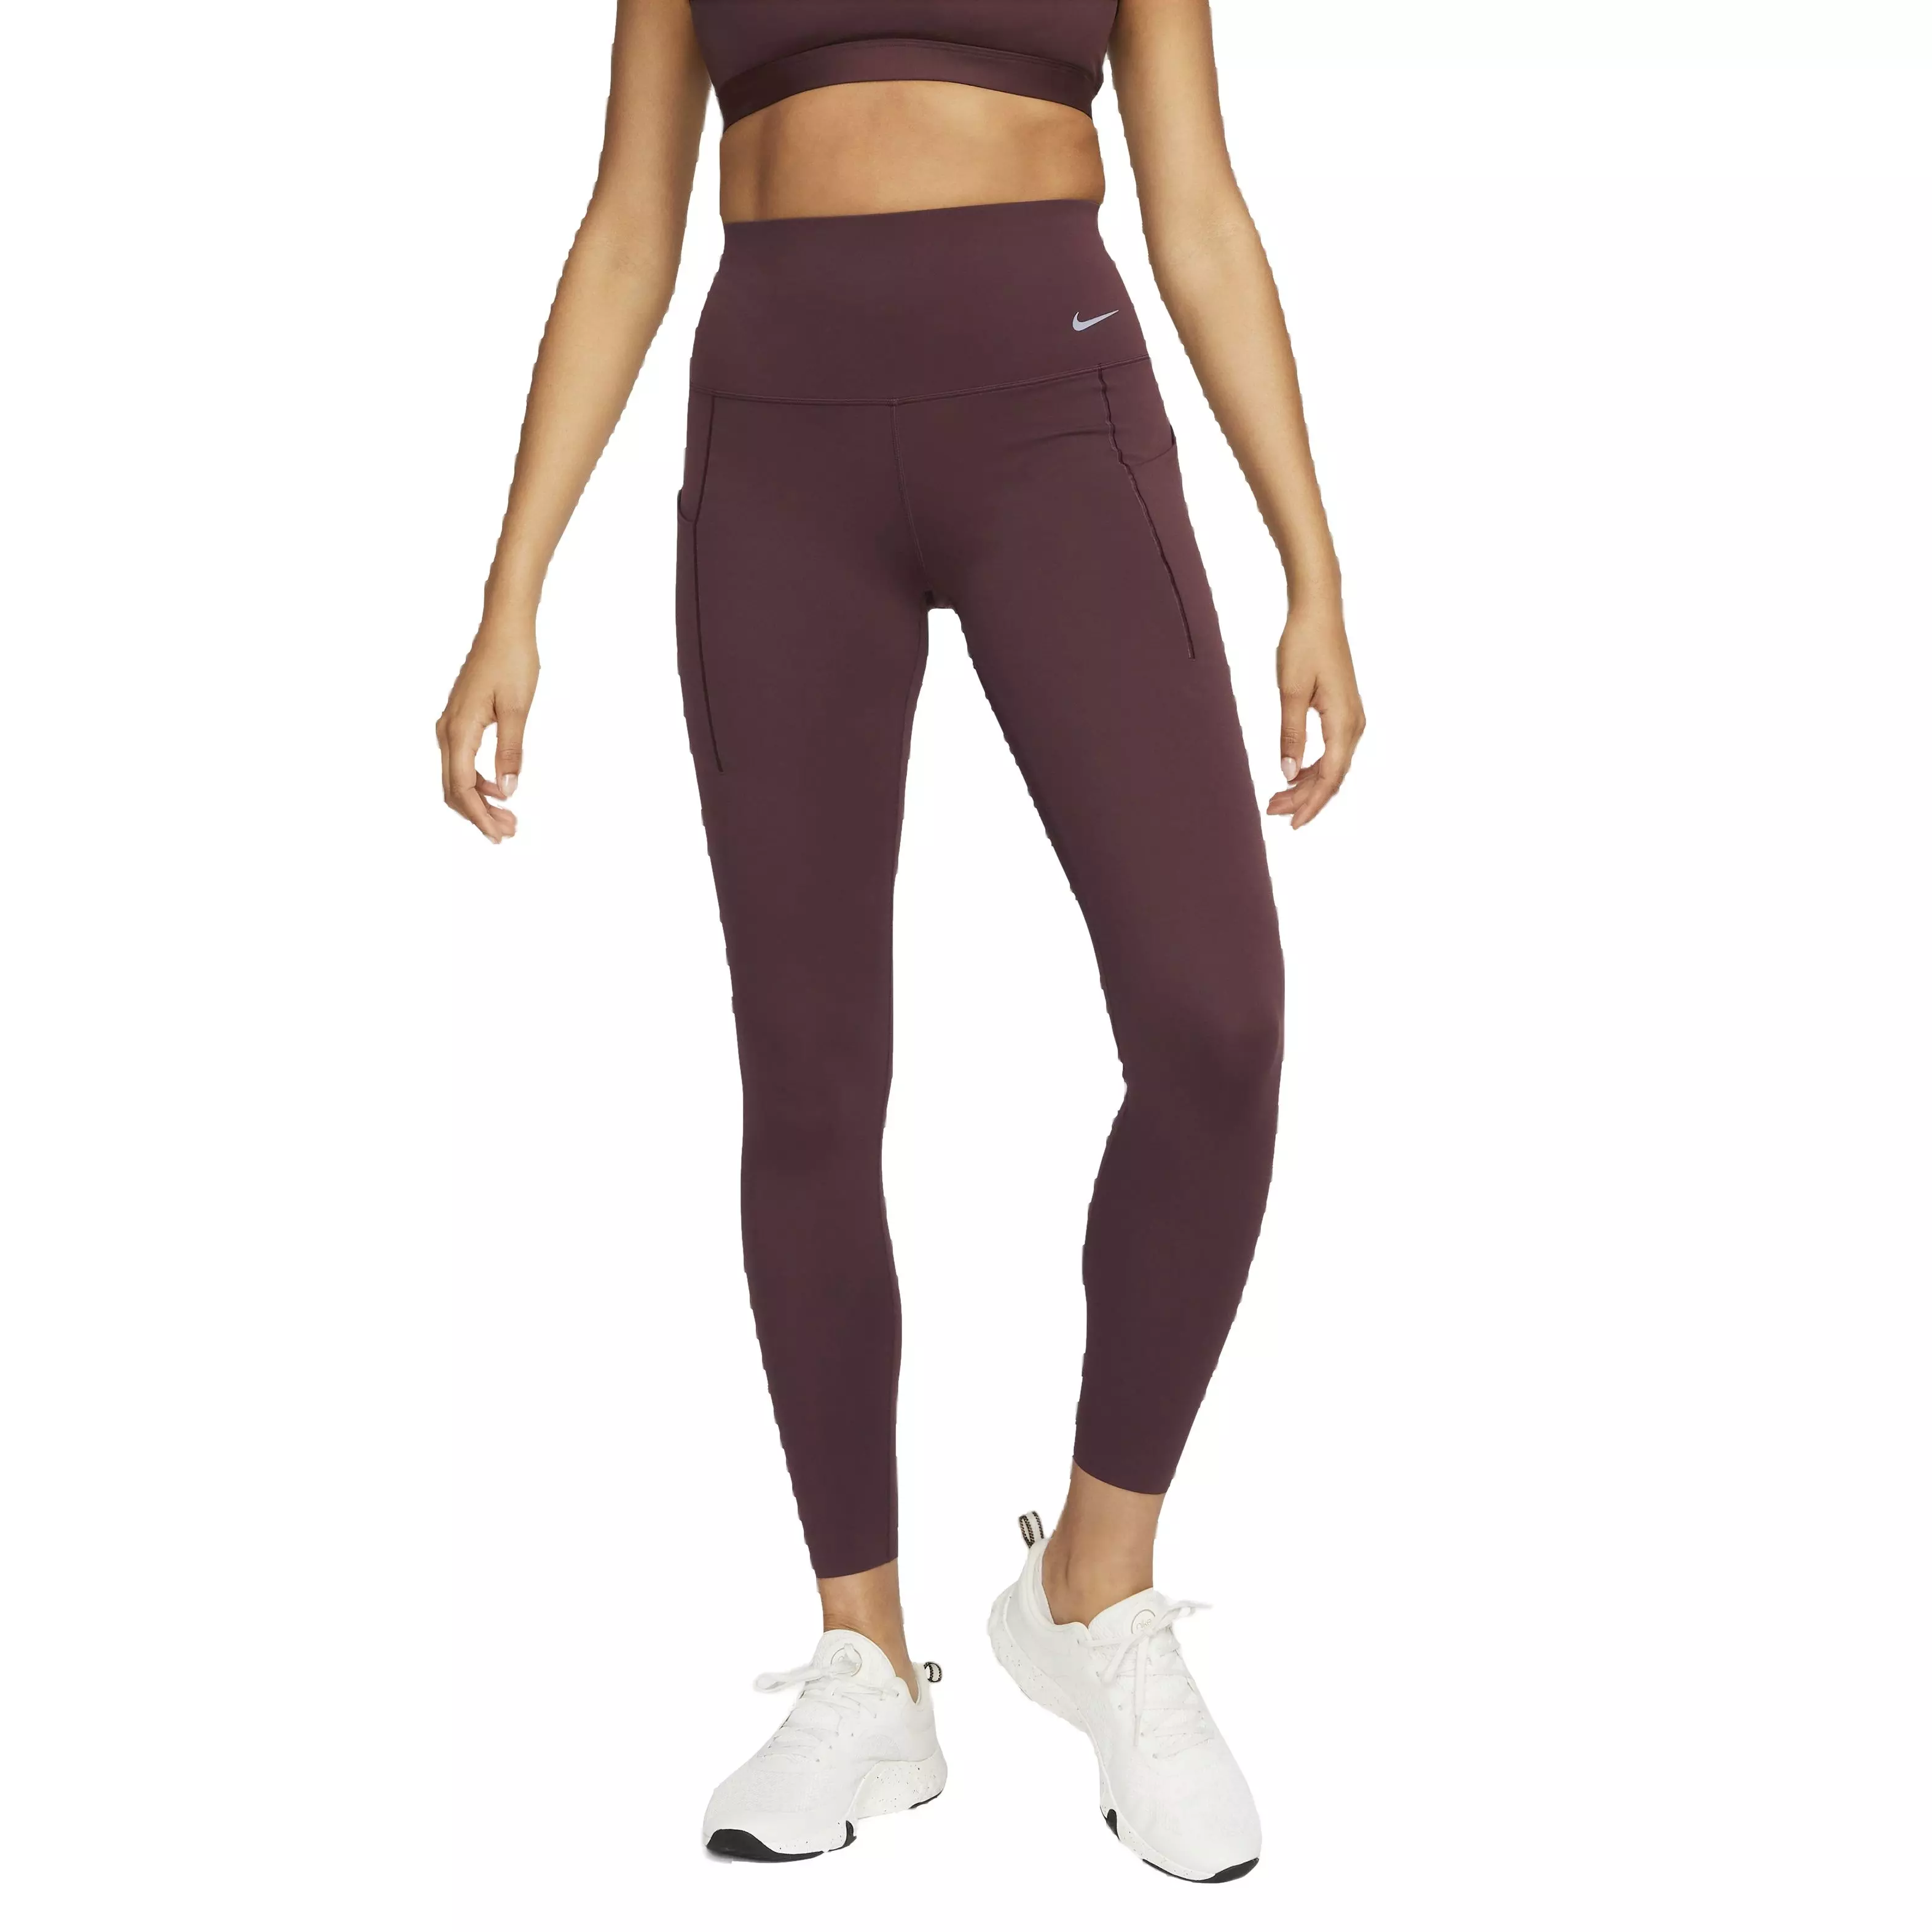 Nike Women's Dri-Fit Universa High Rise Full Length Legging from Nike